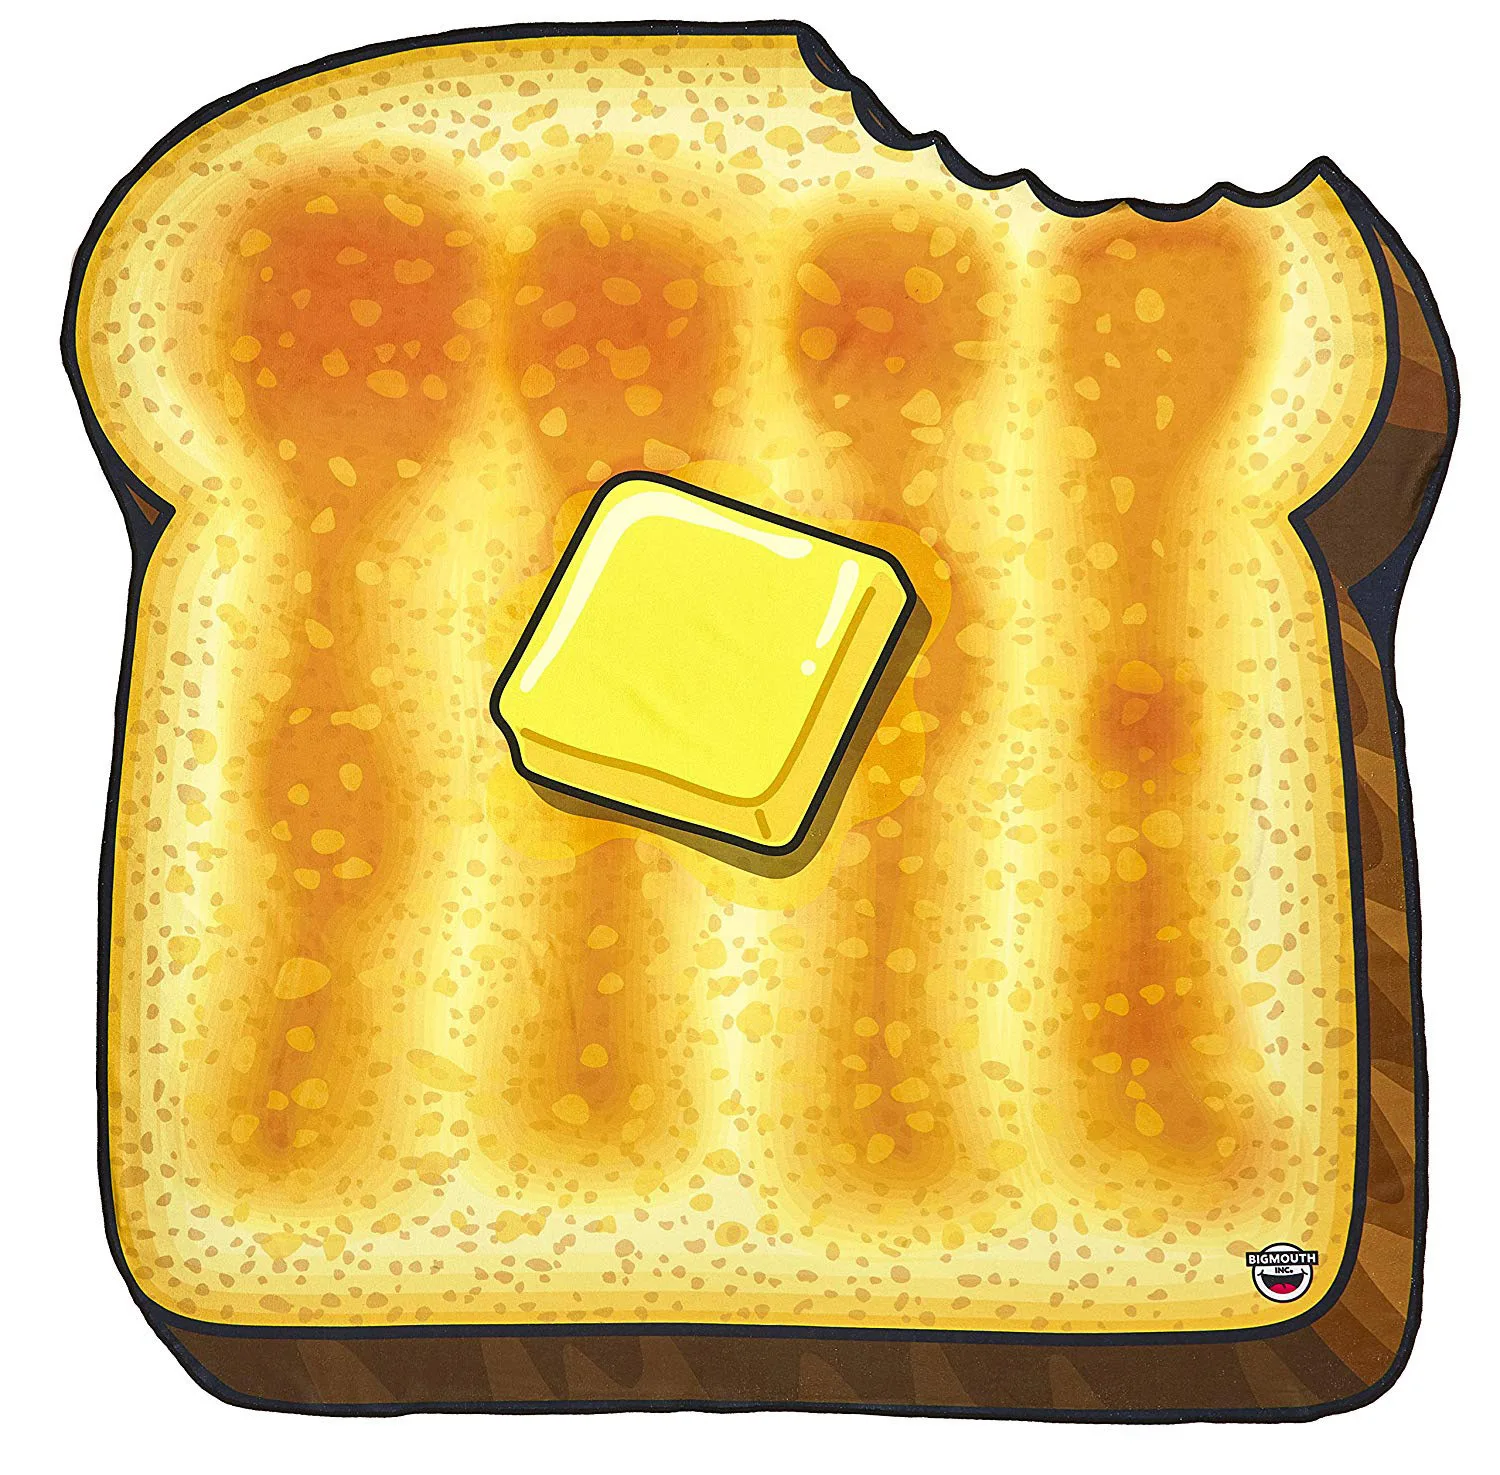 Toast мультяшный